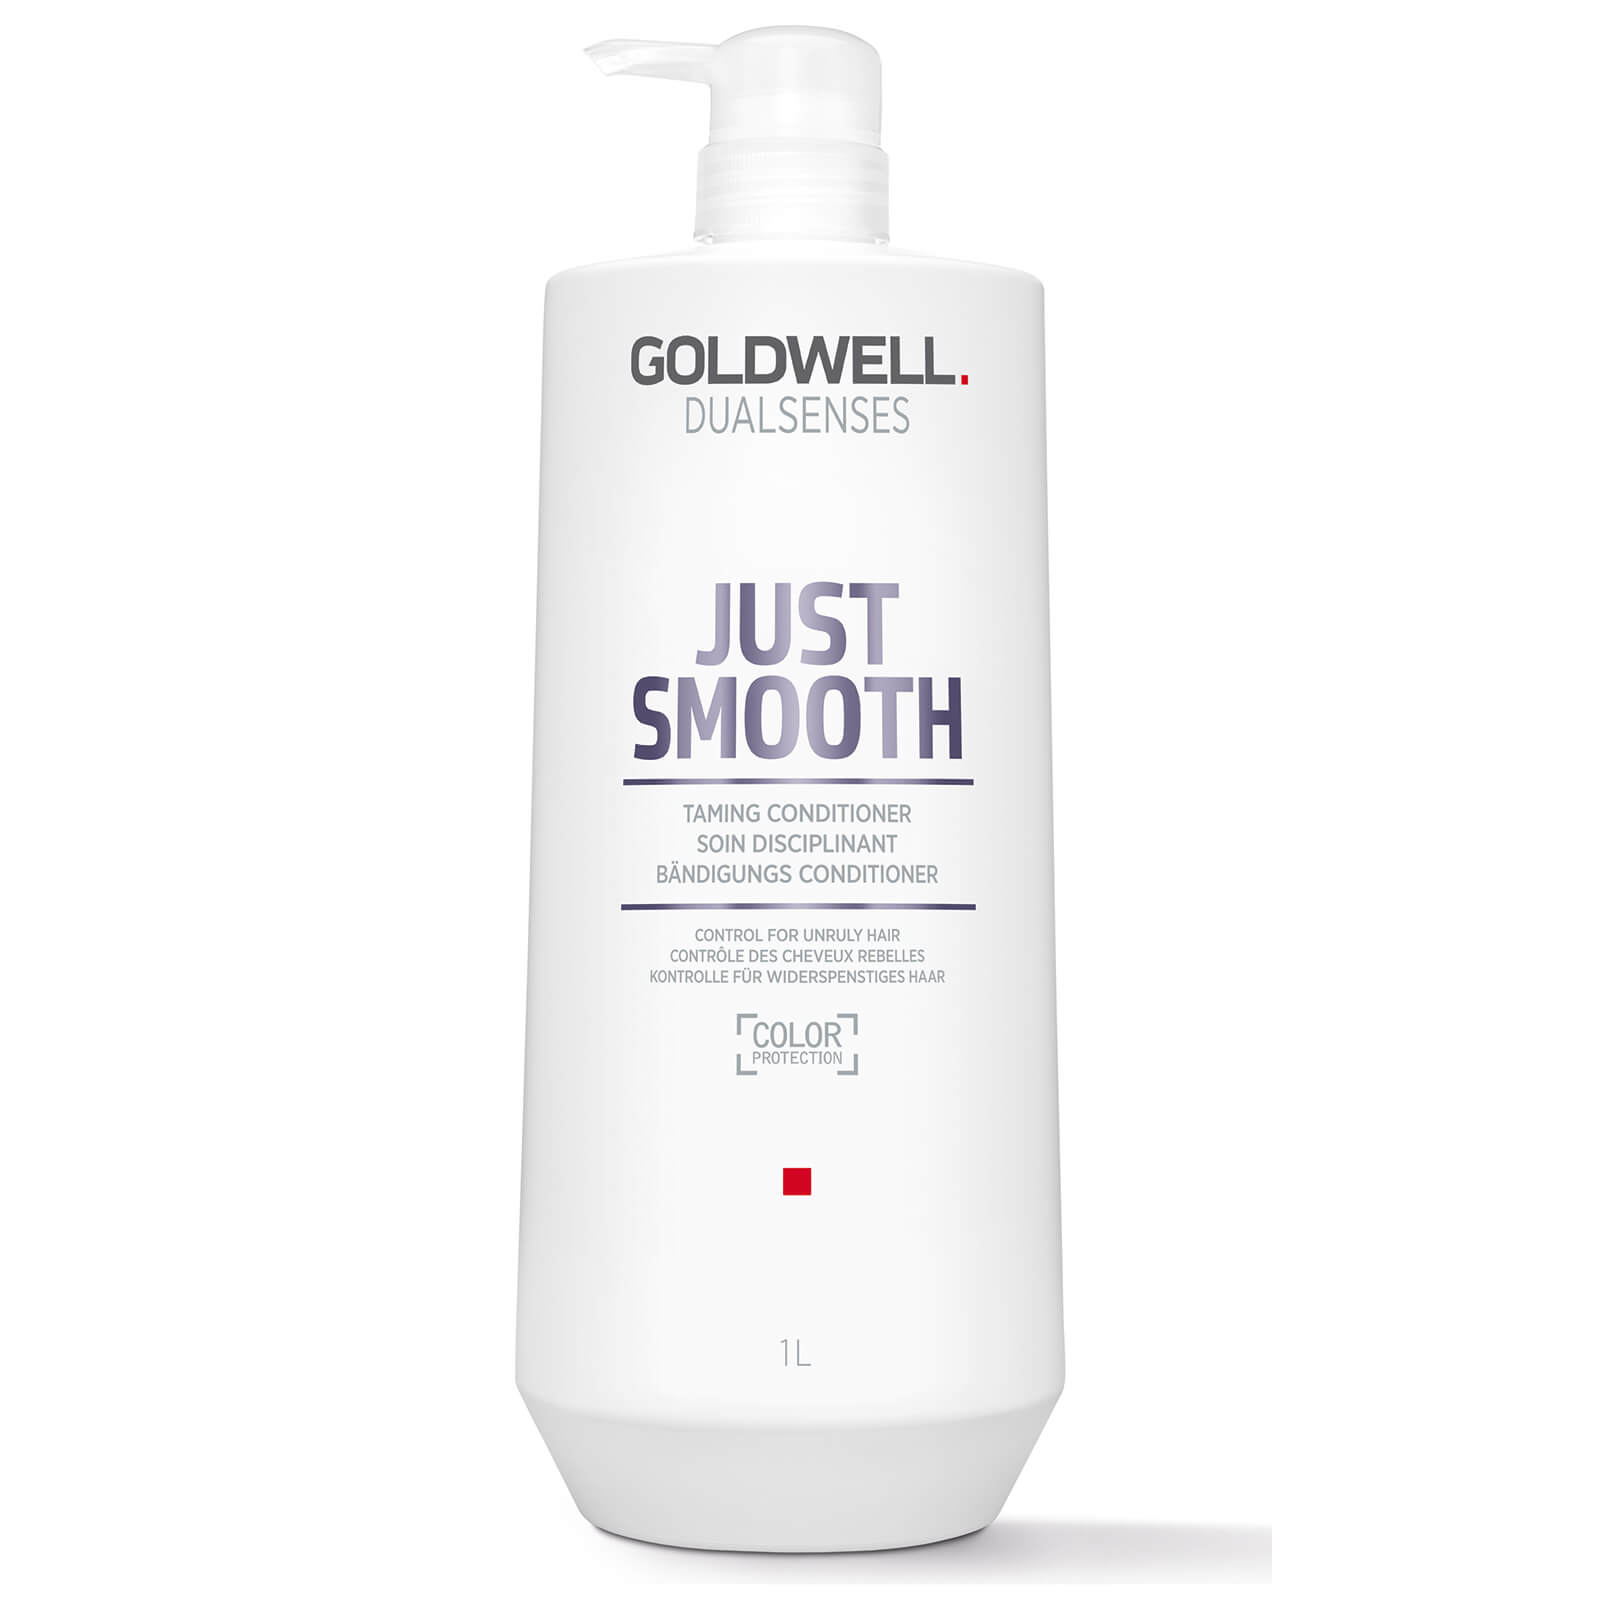 goldwell soin disciplinant just smooth dualsenses 1 000Â ml